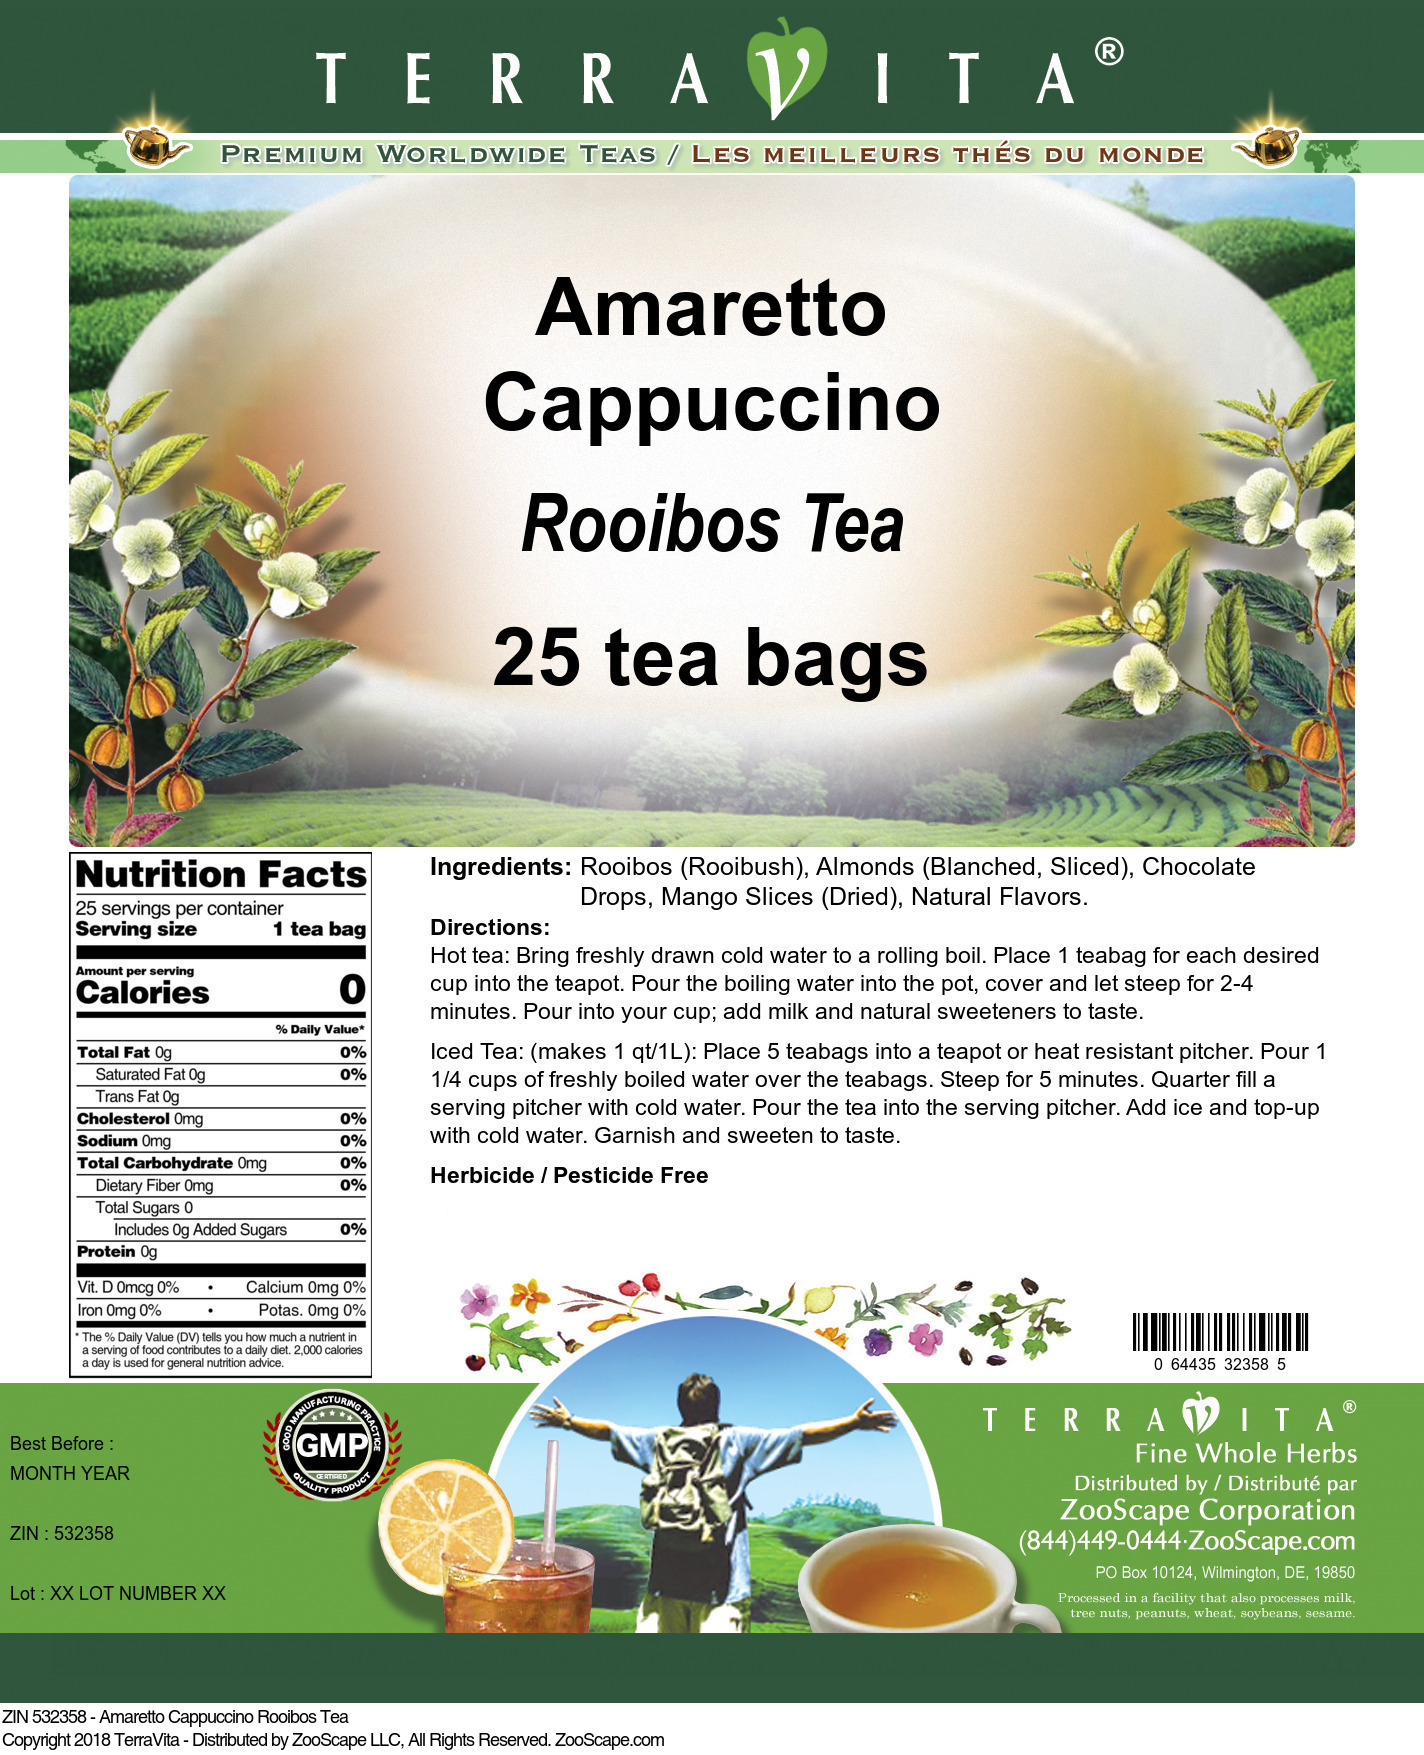 Amaretto Cappuccino Rooibos Tea - Label